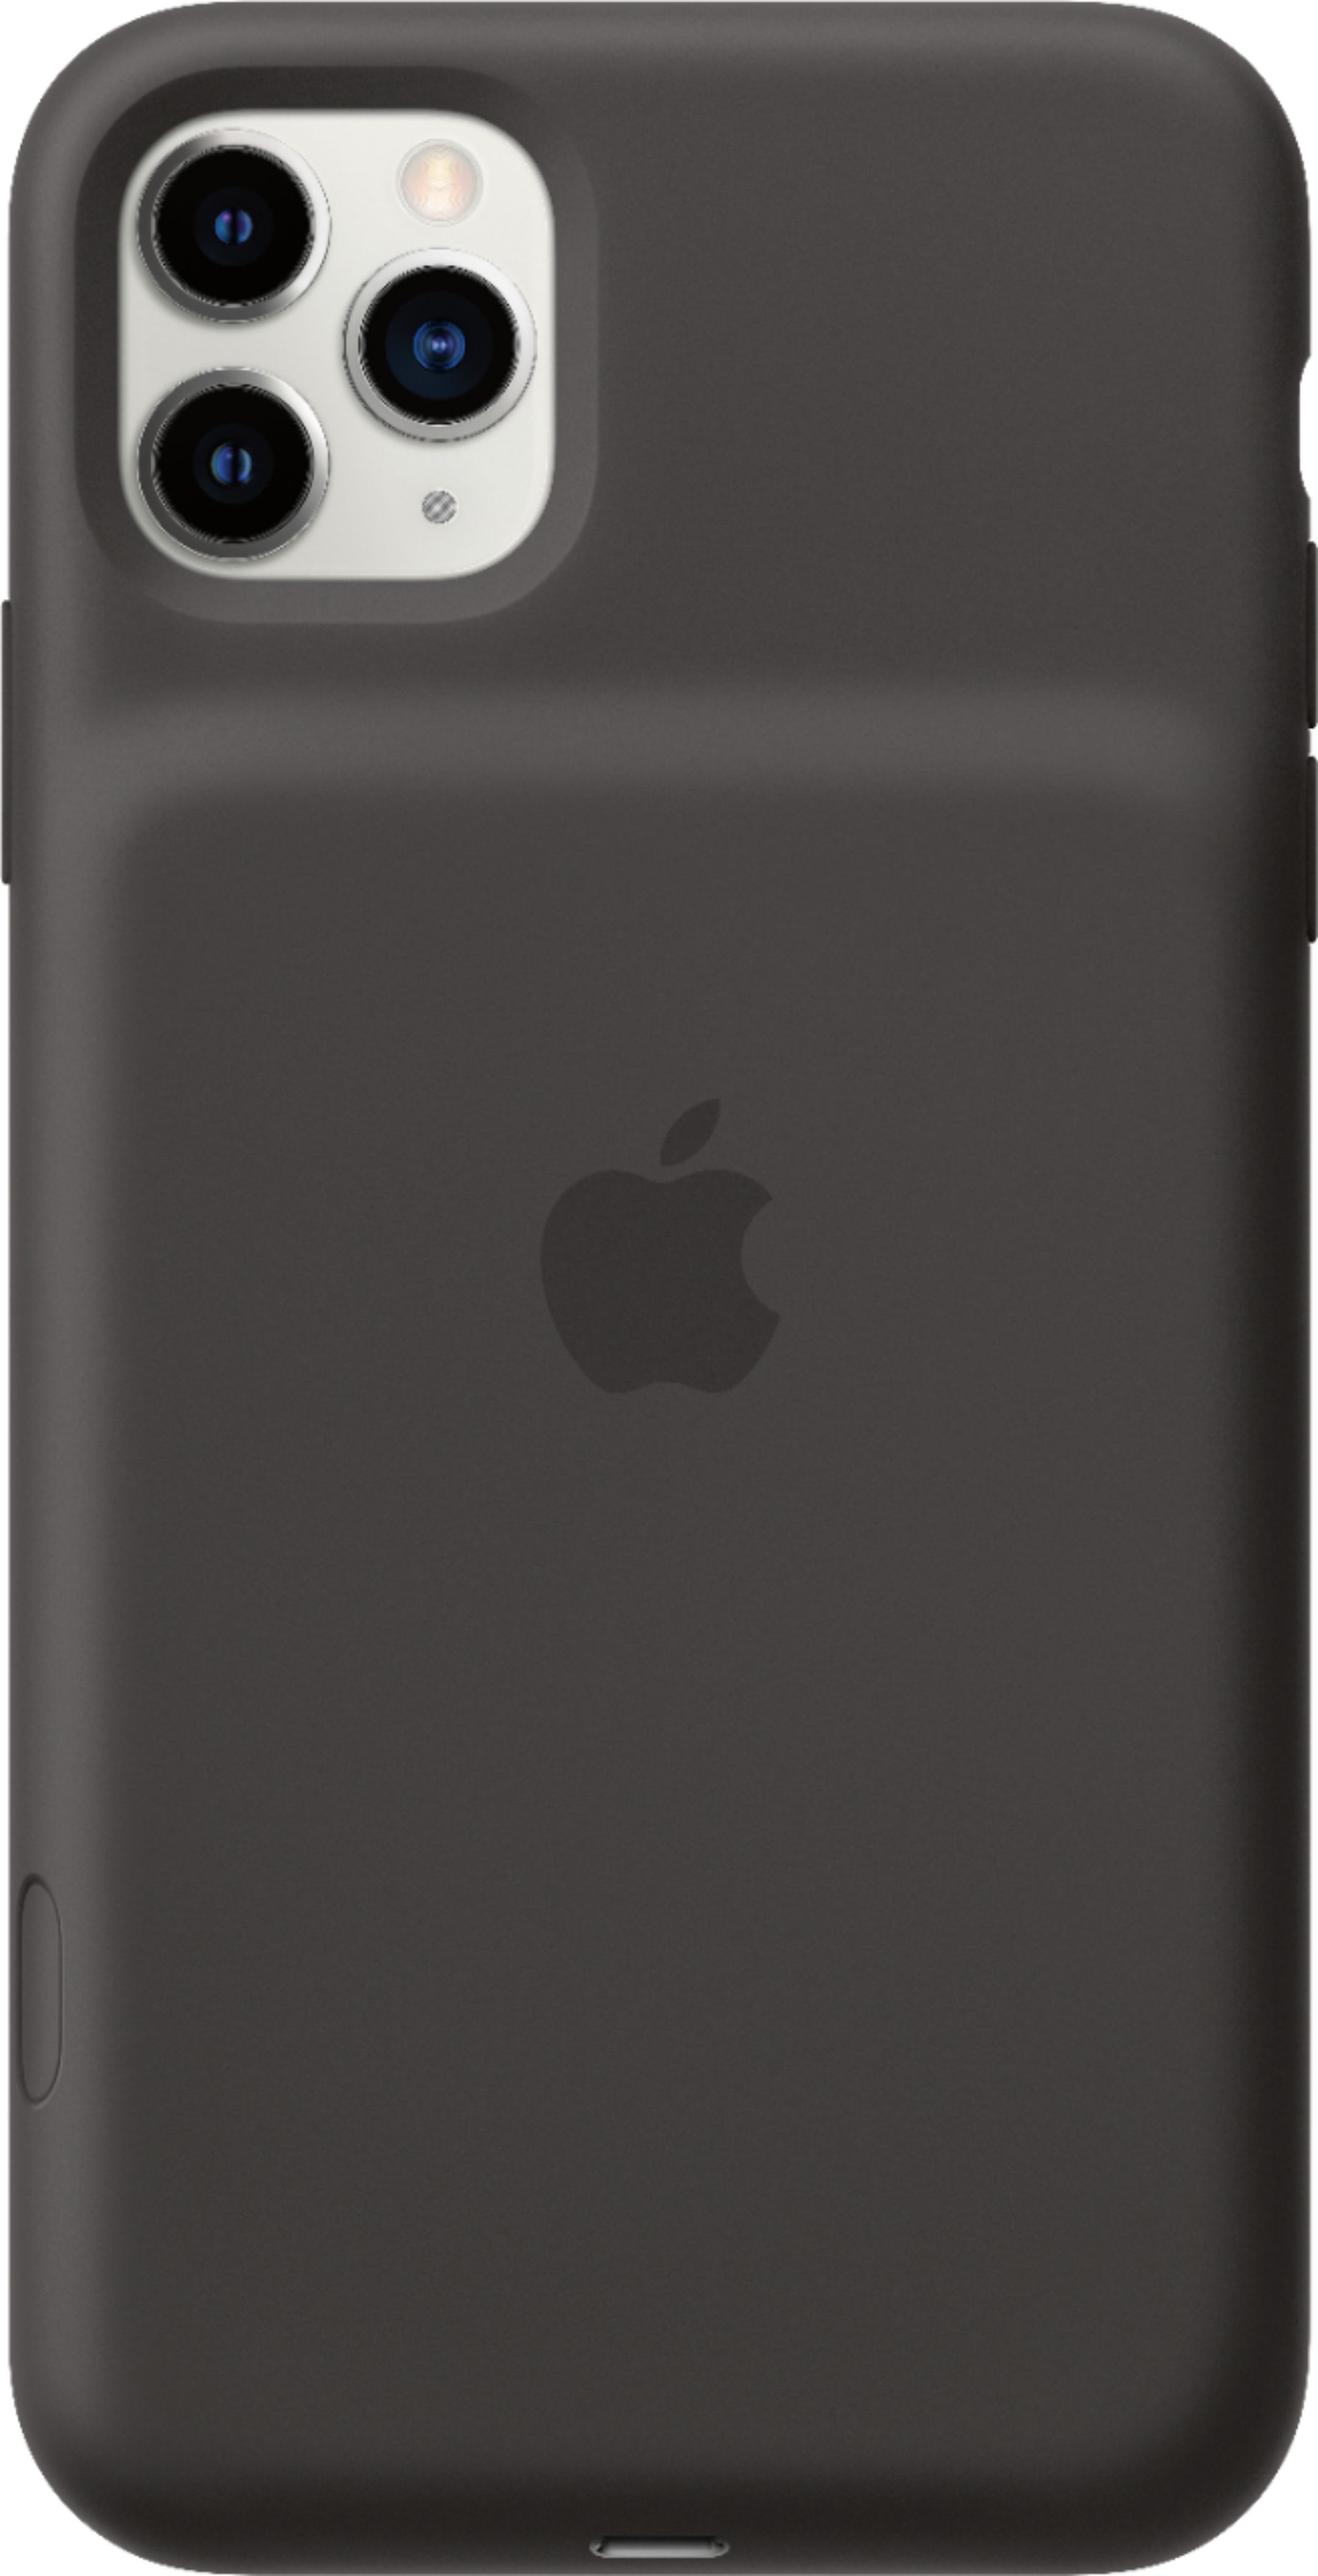 Apple iPhone 11 Pro Max Smart Battery Case Black - Best Buy